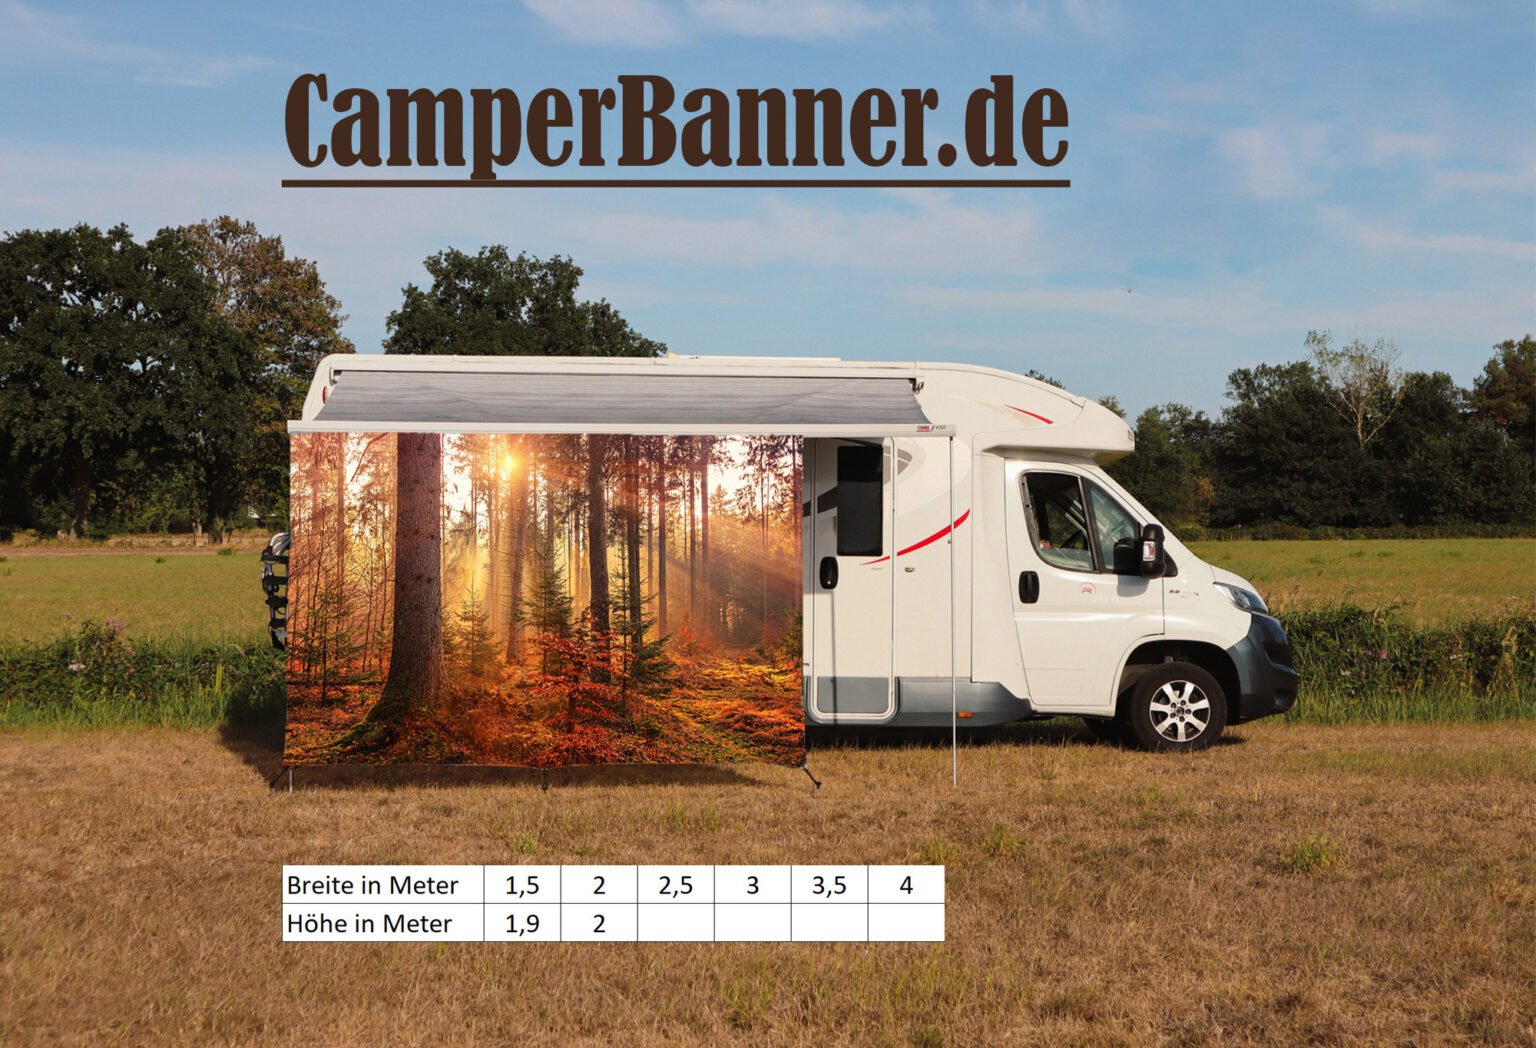 Wohnmobil Banner Markise Sonnenschutz Wald Bäume